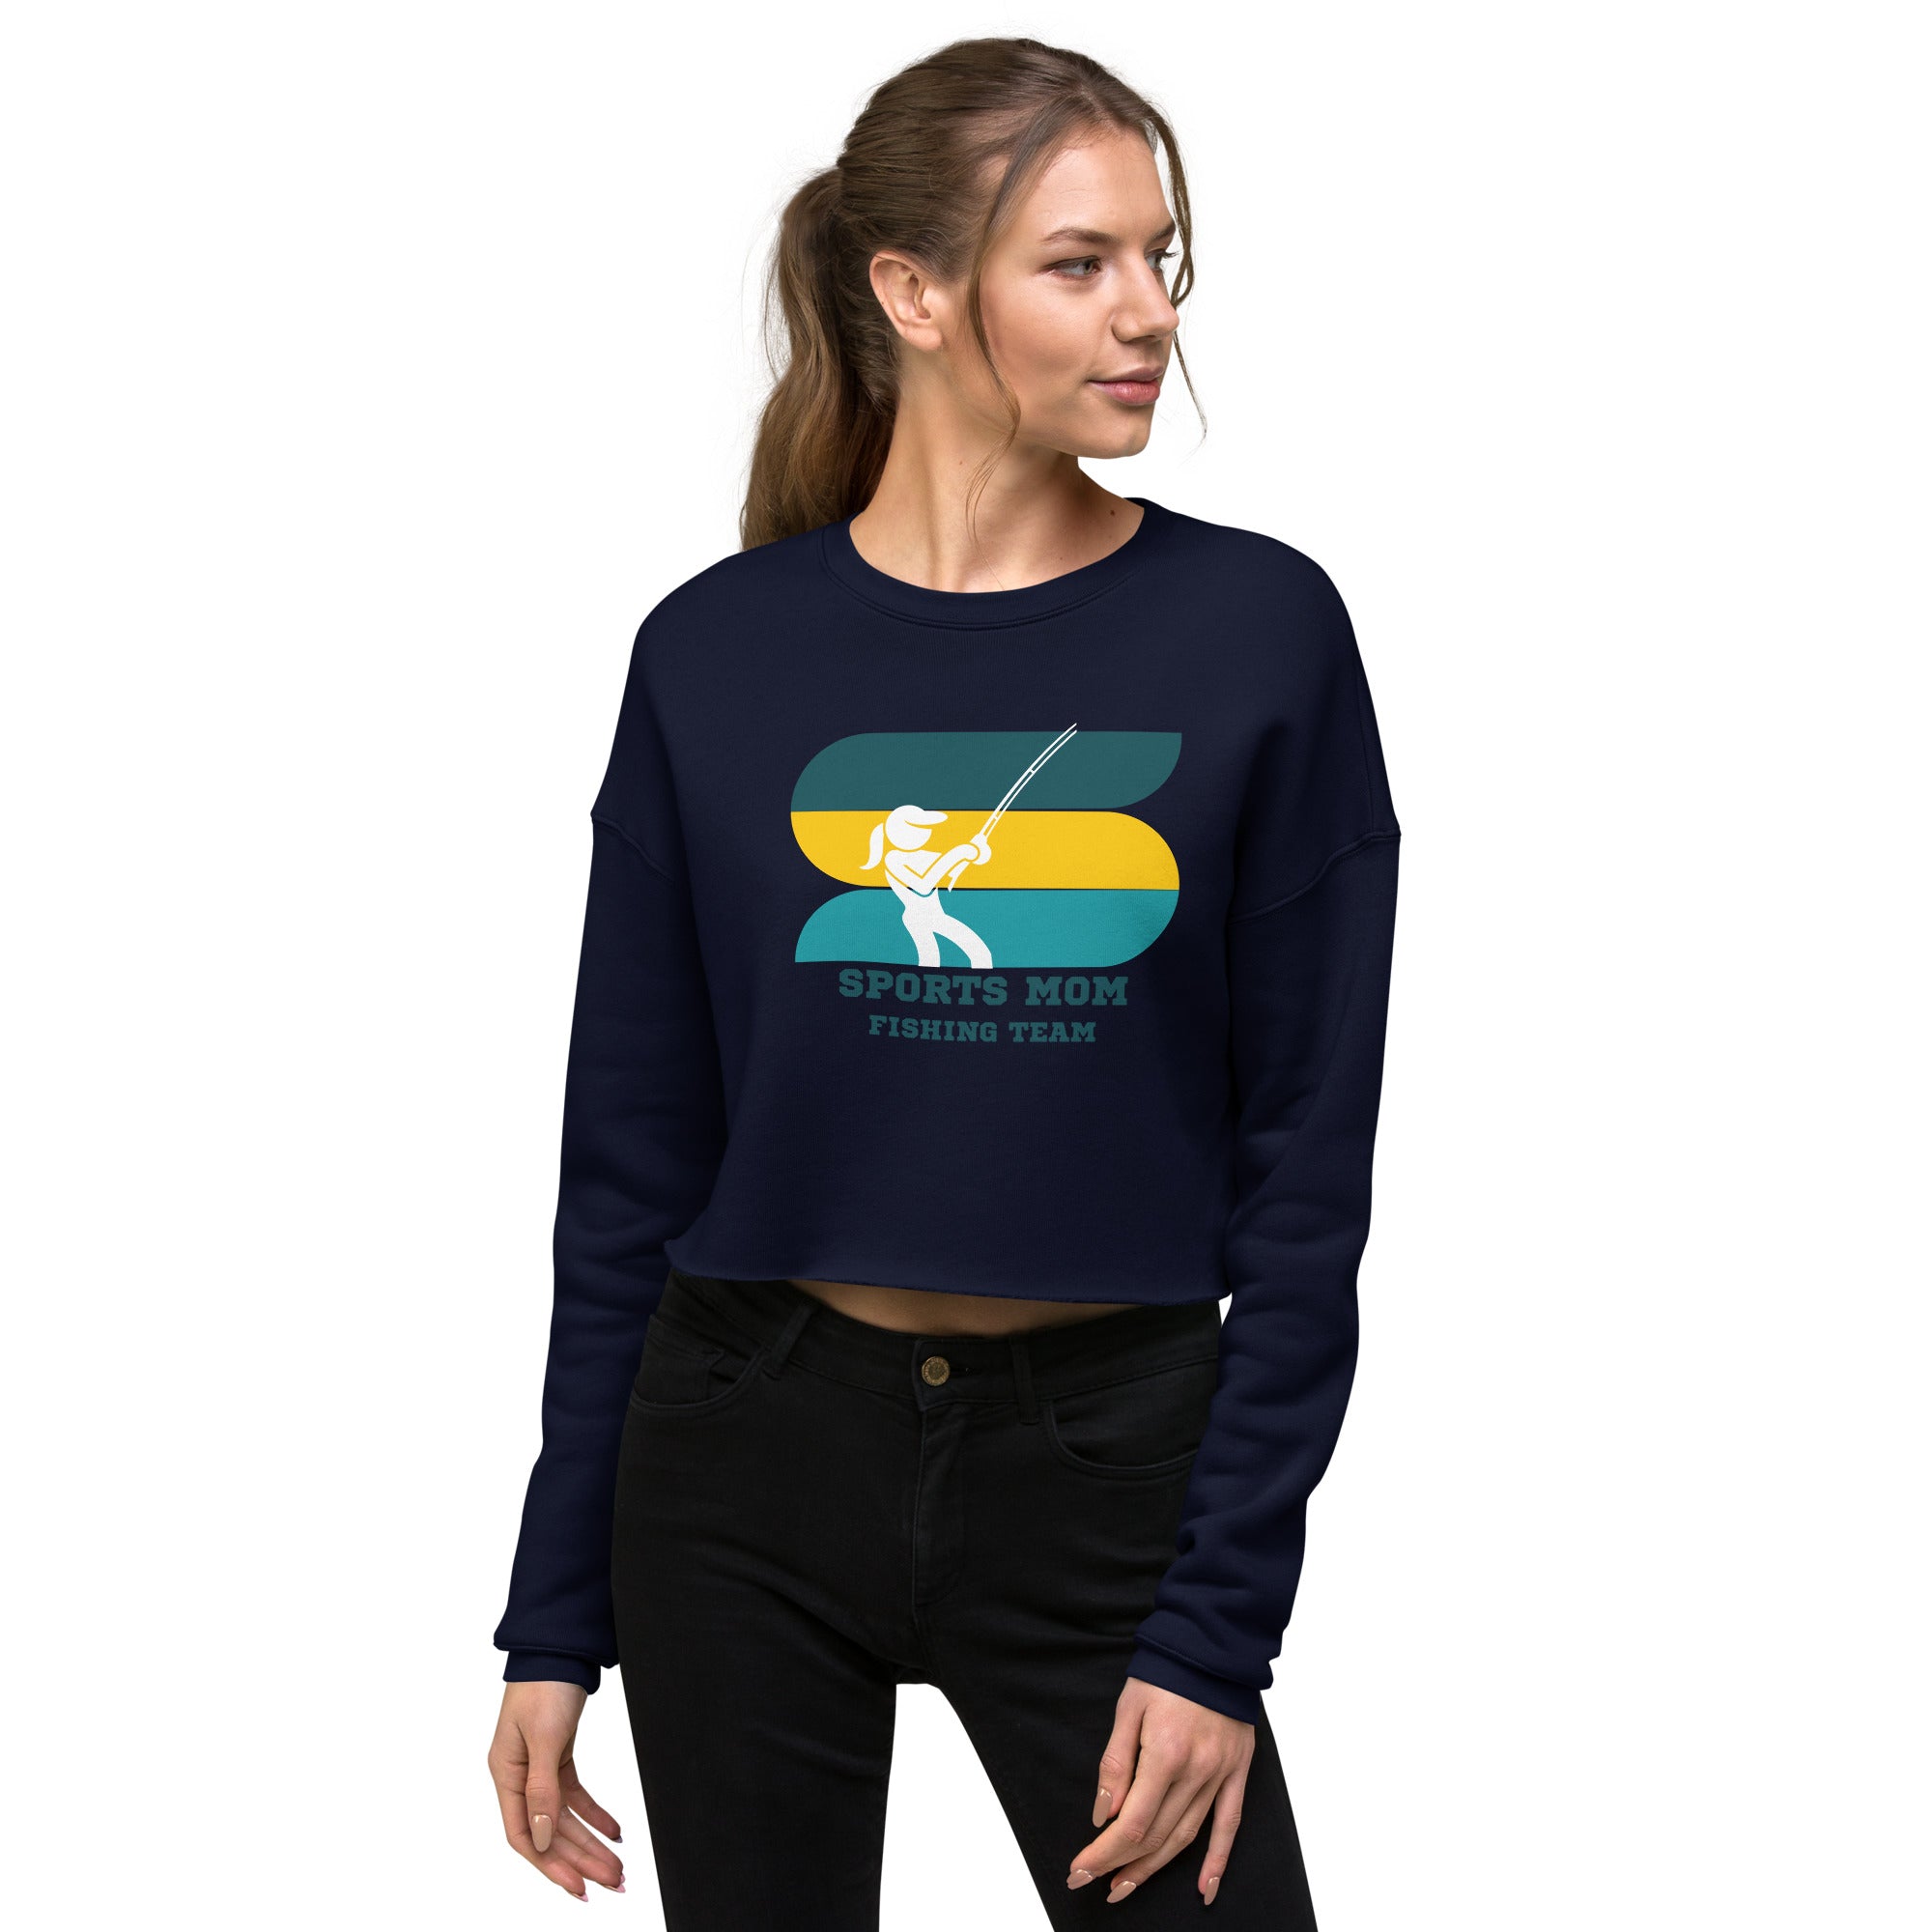 The Original Sports Mom Fishing Team Women's Crop Sweatshirt